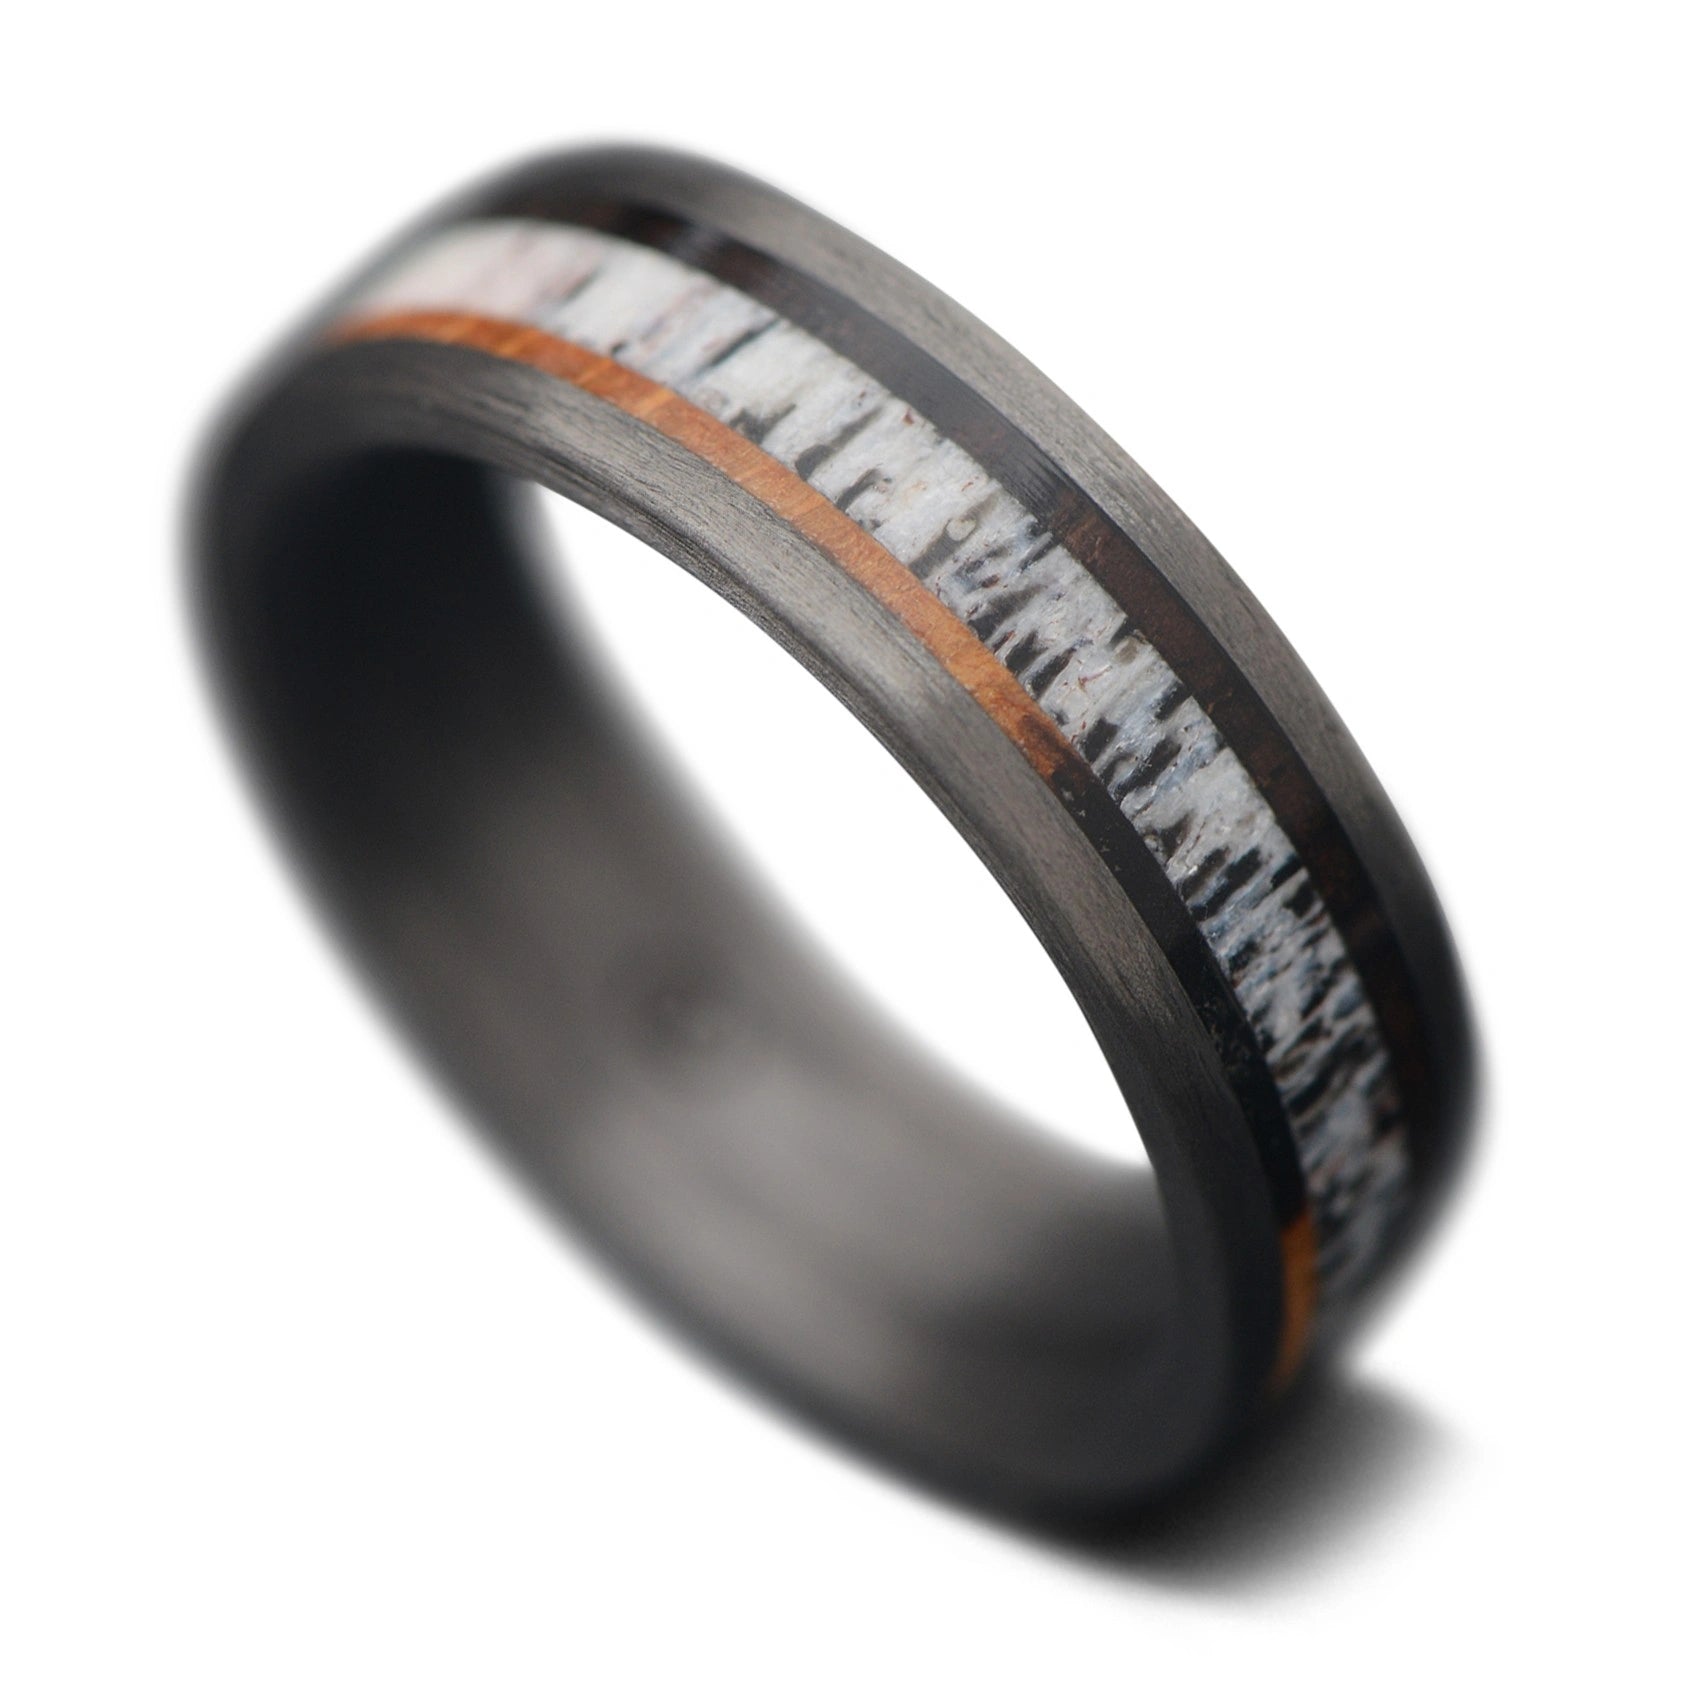 CarbonUni Core Ring with  African Blackwood, Deer Antler, Whiskey Barrel Oak inlay, 7mm -THE MATRIX